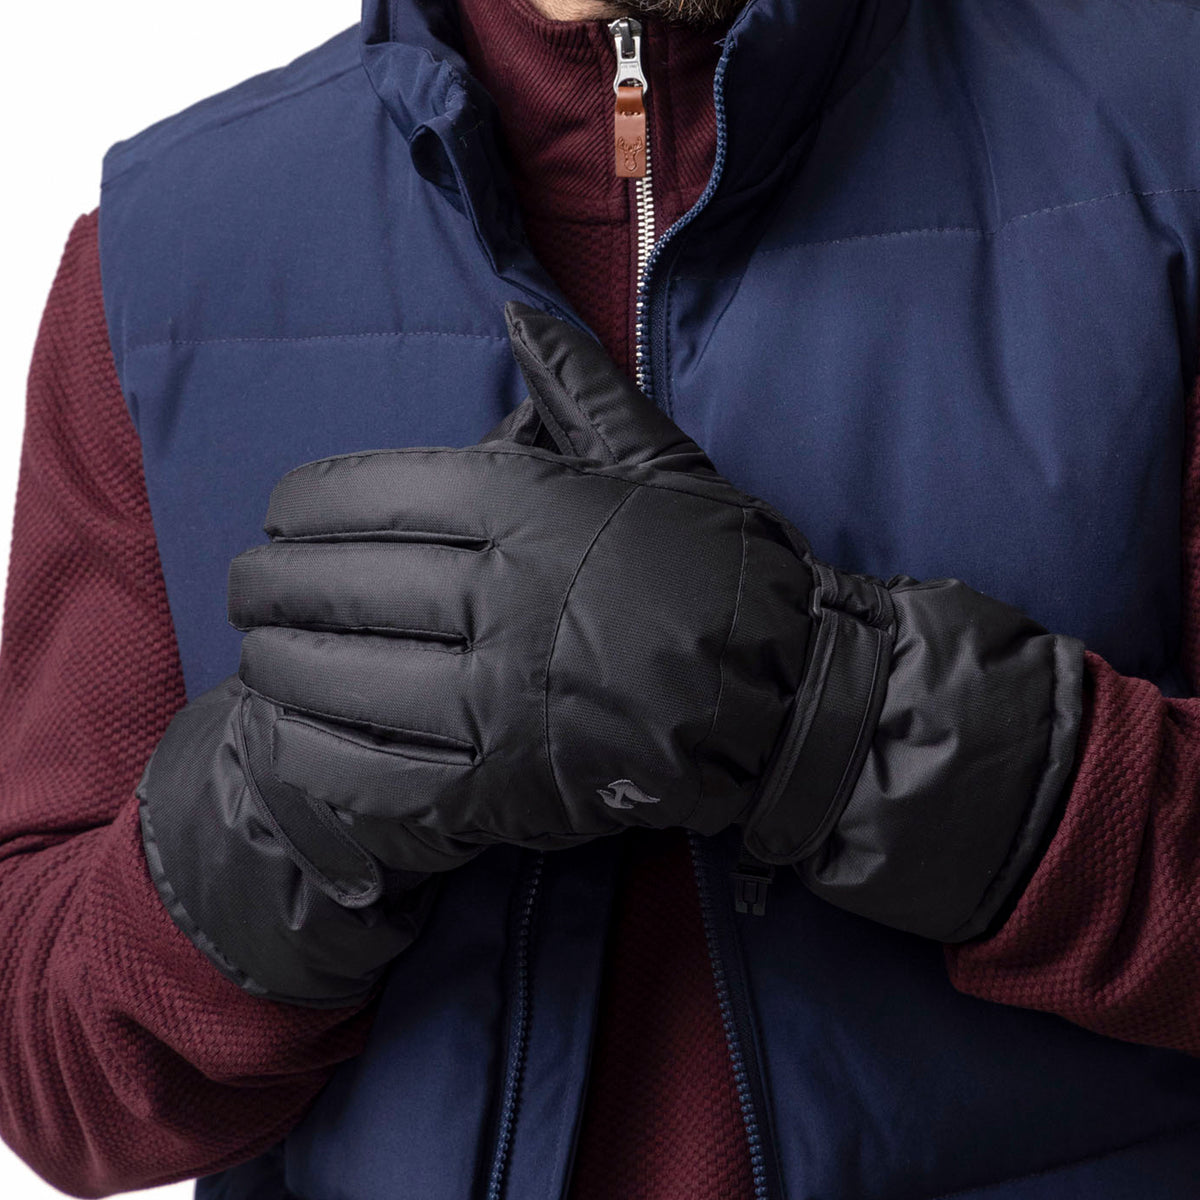 Gants de ski ultra-chauds Femme Heat Holders - Acheter sur Douce